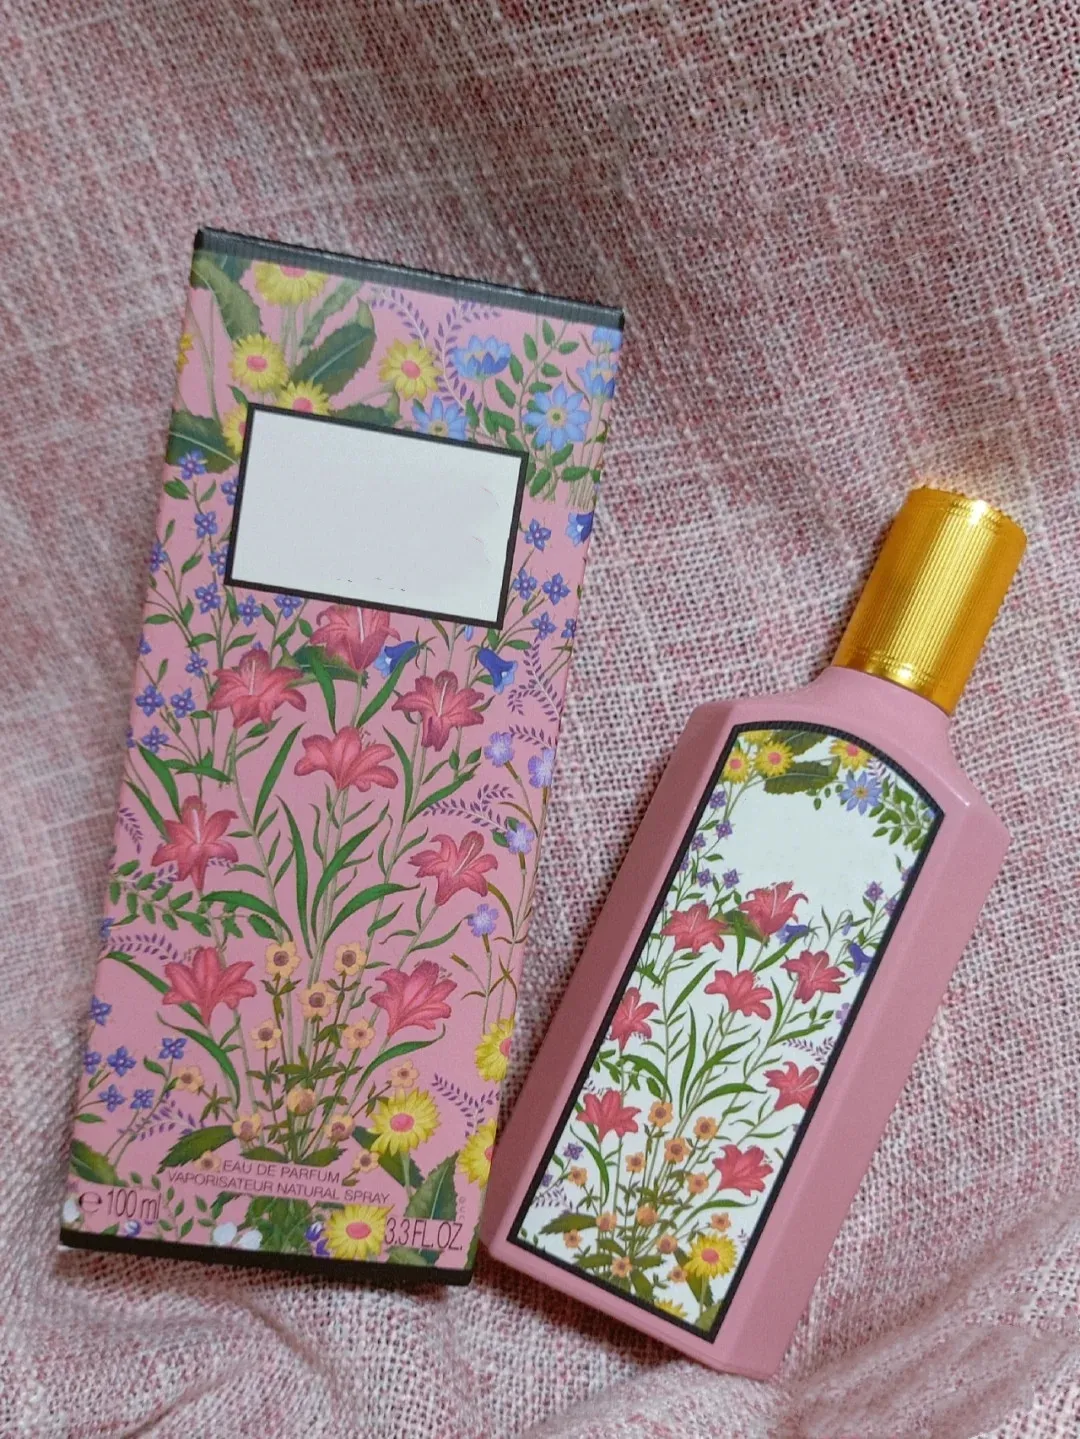 Factory direct perfumes latest models for women perfume Flora 100ml Good gift spray Fresh pleasant fragrance Fast ship